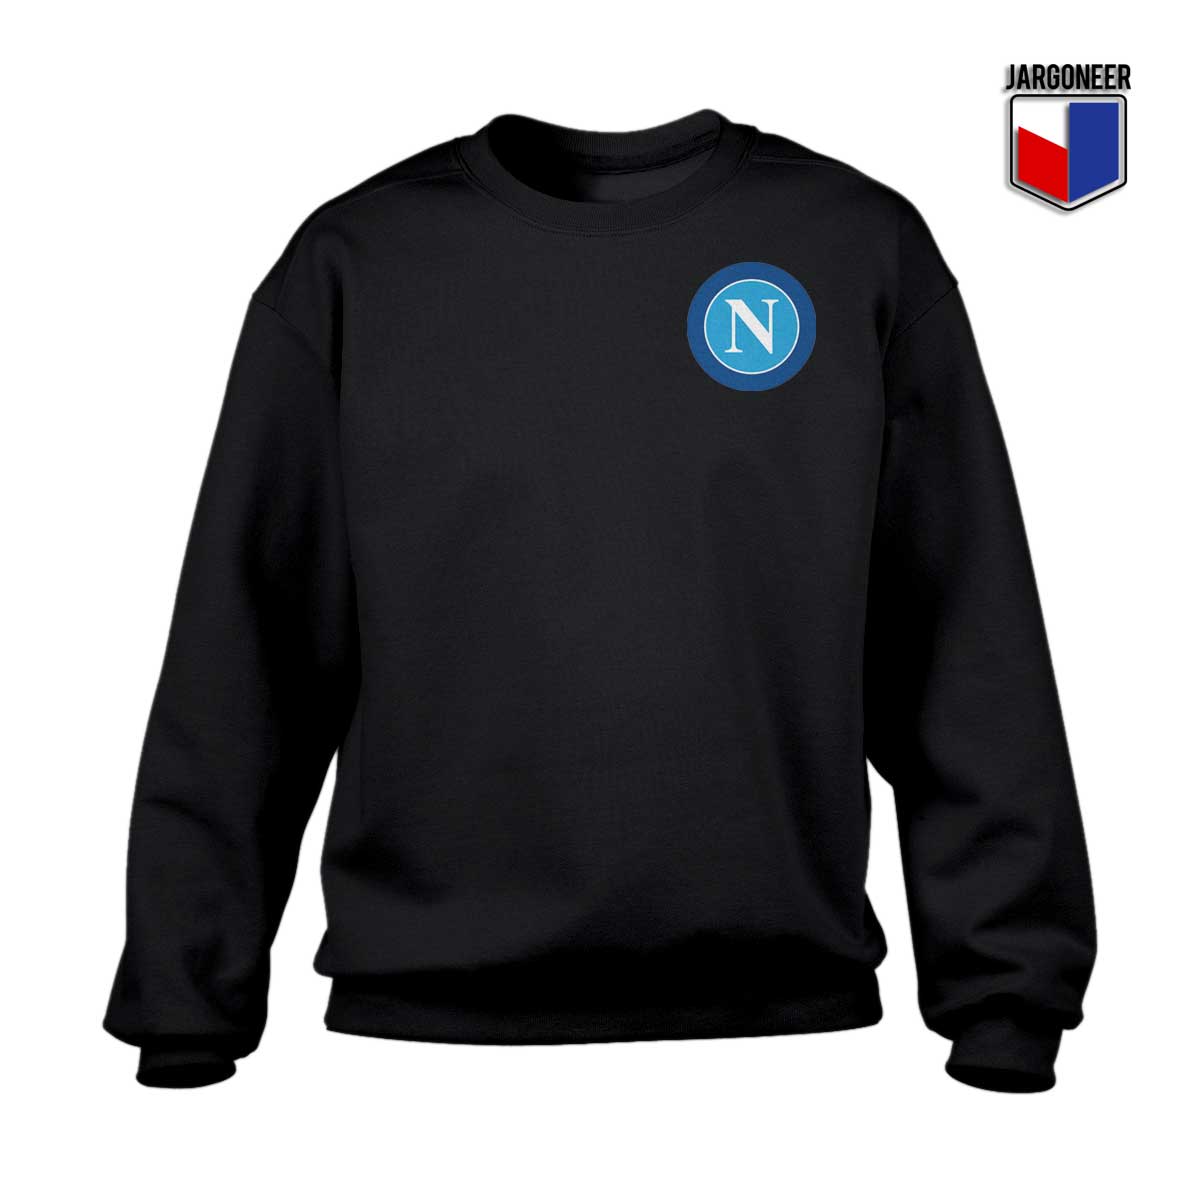 Napoli Logo Black Sweatshirt - Shop Unique Graphic Cool Shirt Designs